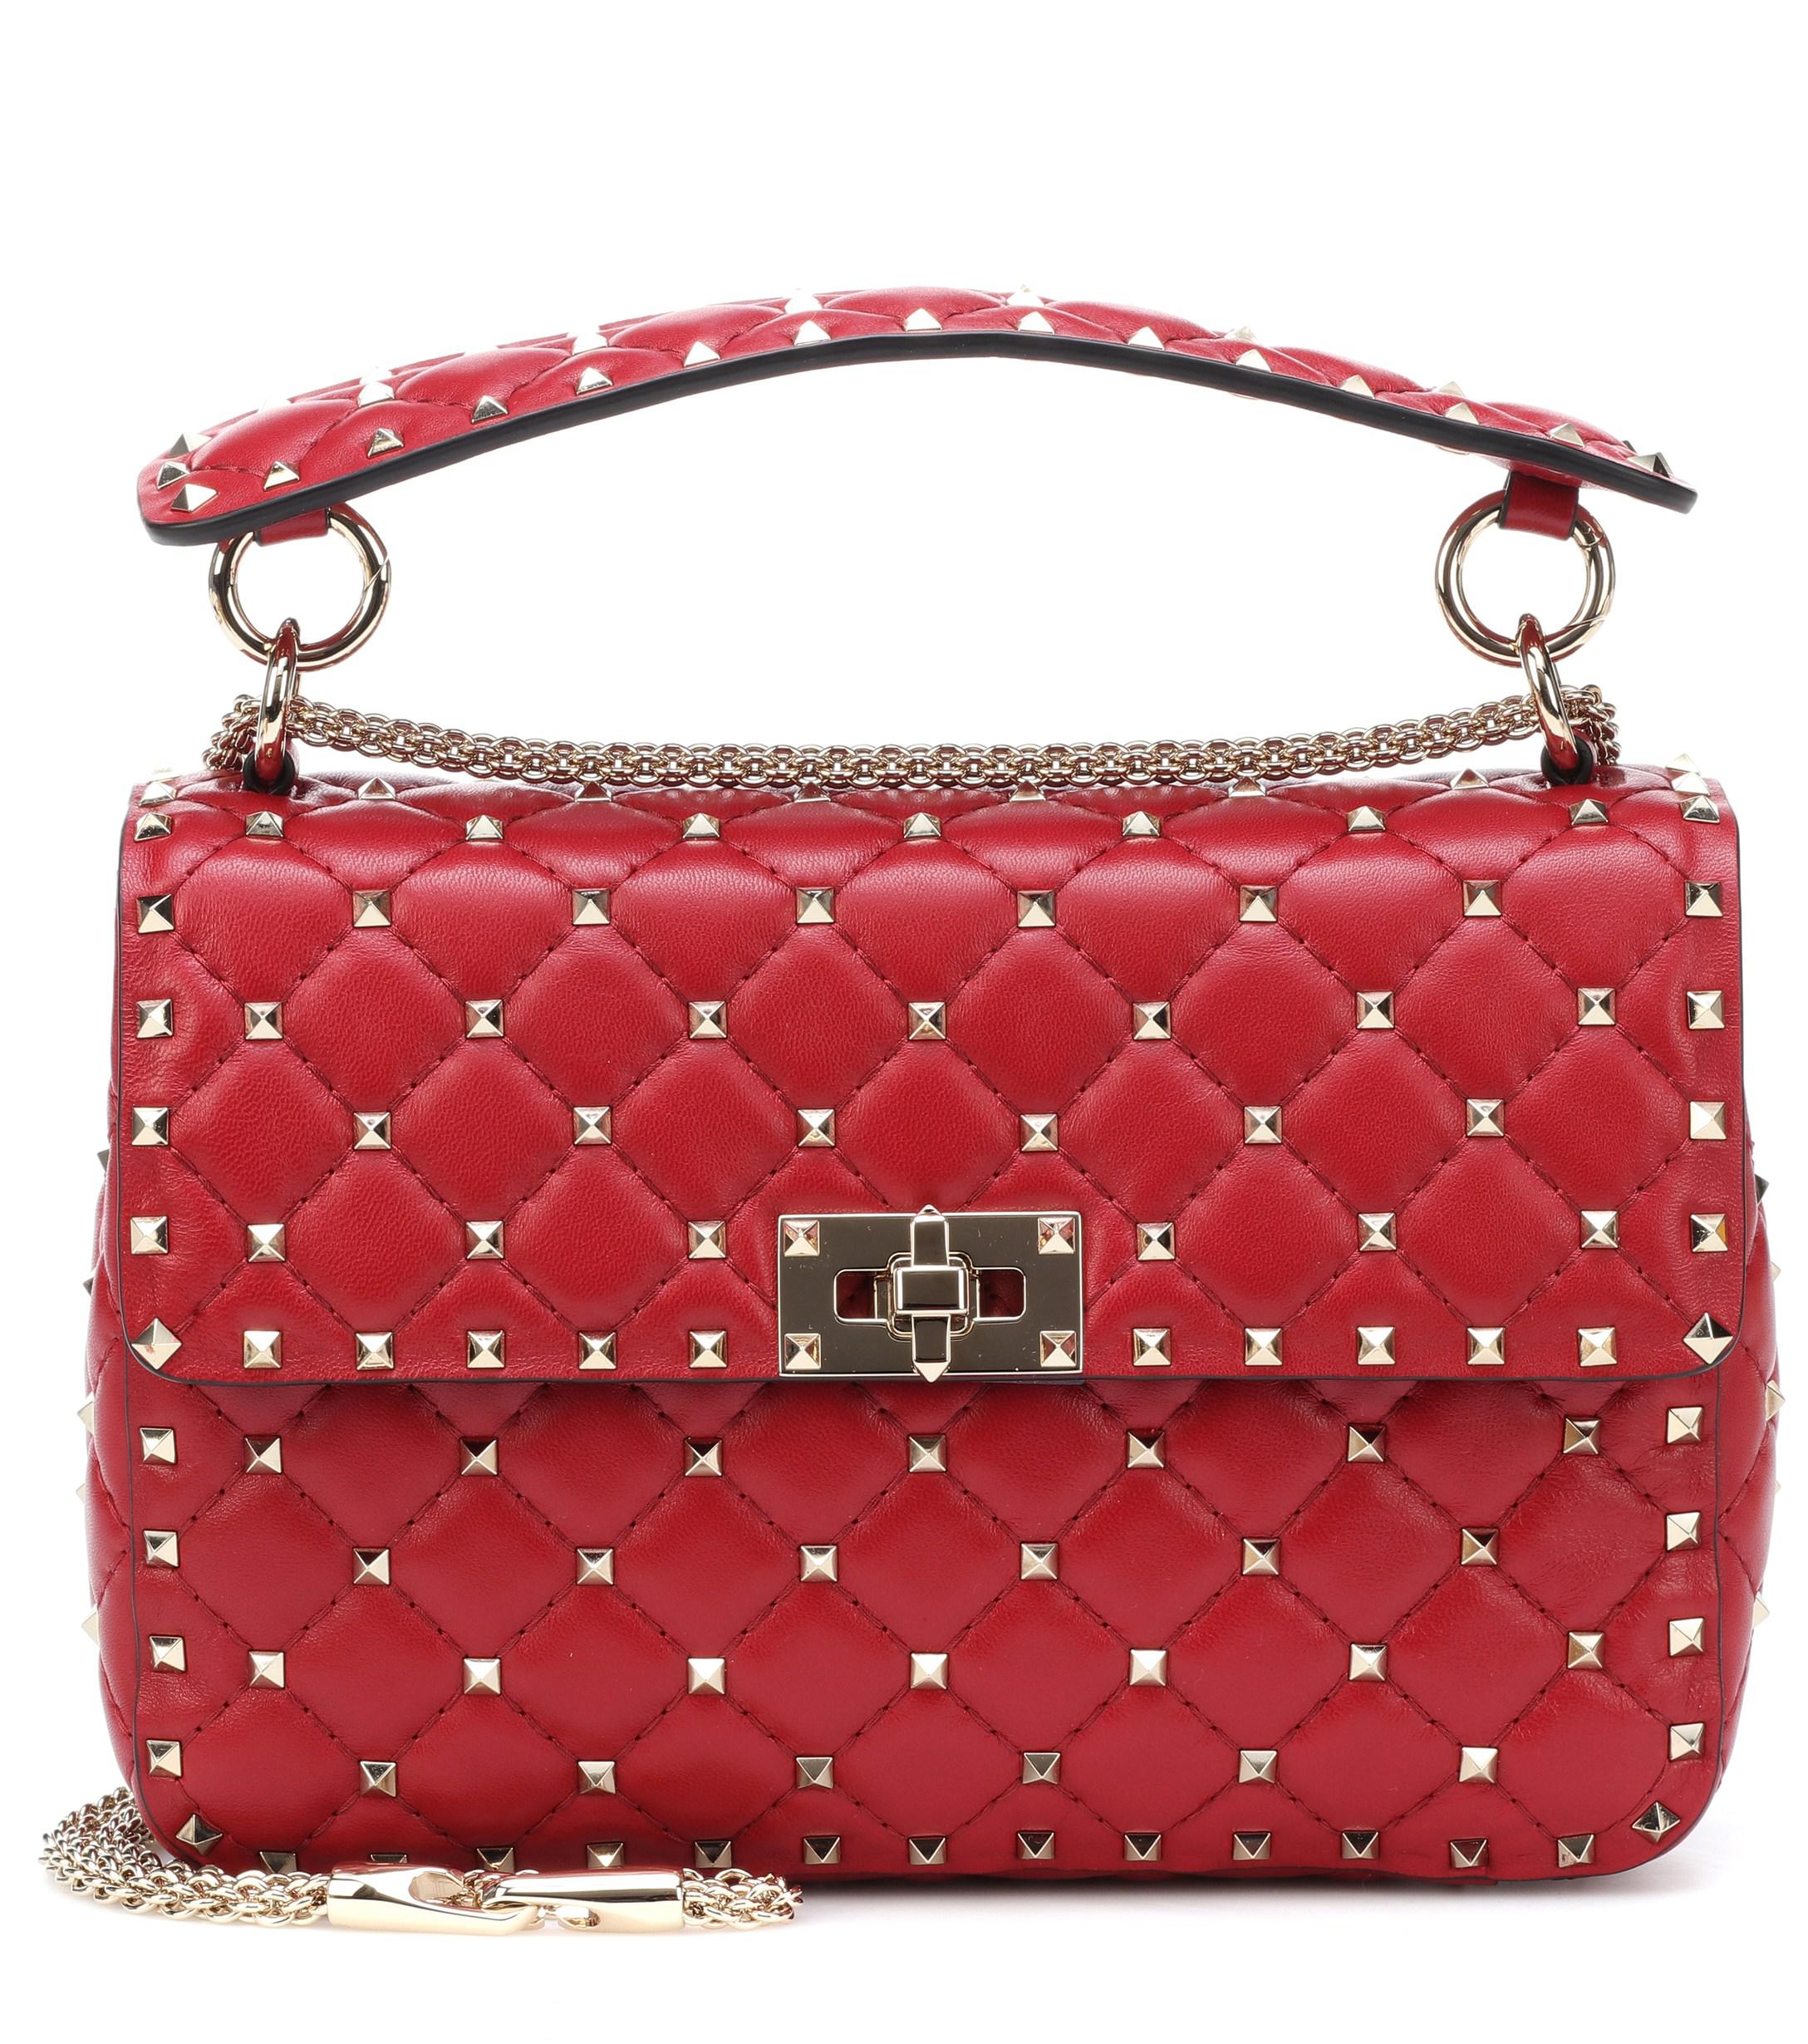 Lyst - Valentino Rockstud Spike Medium Leather Shoulder Bag in Red